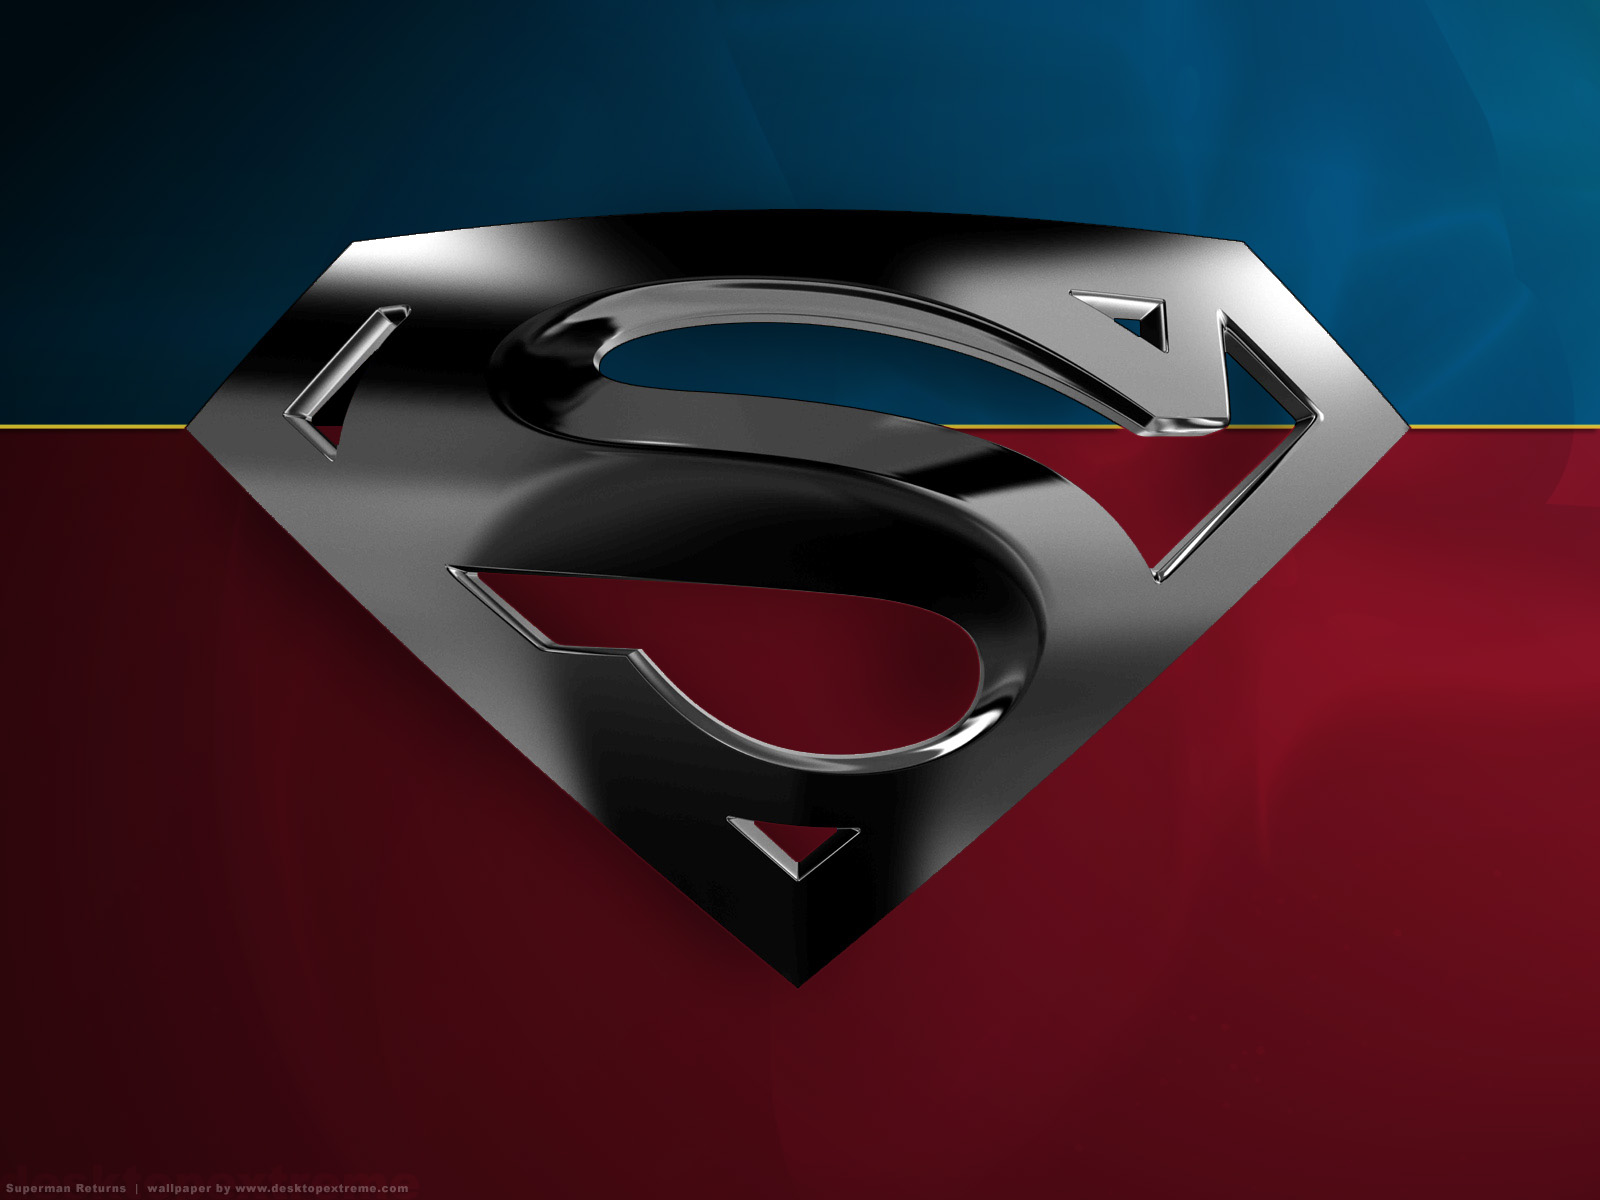 Spermen HD Logo Superman Wallpaper   Hd Full Resimler Galerisi